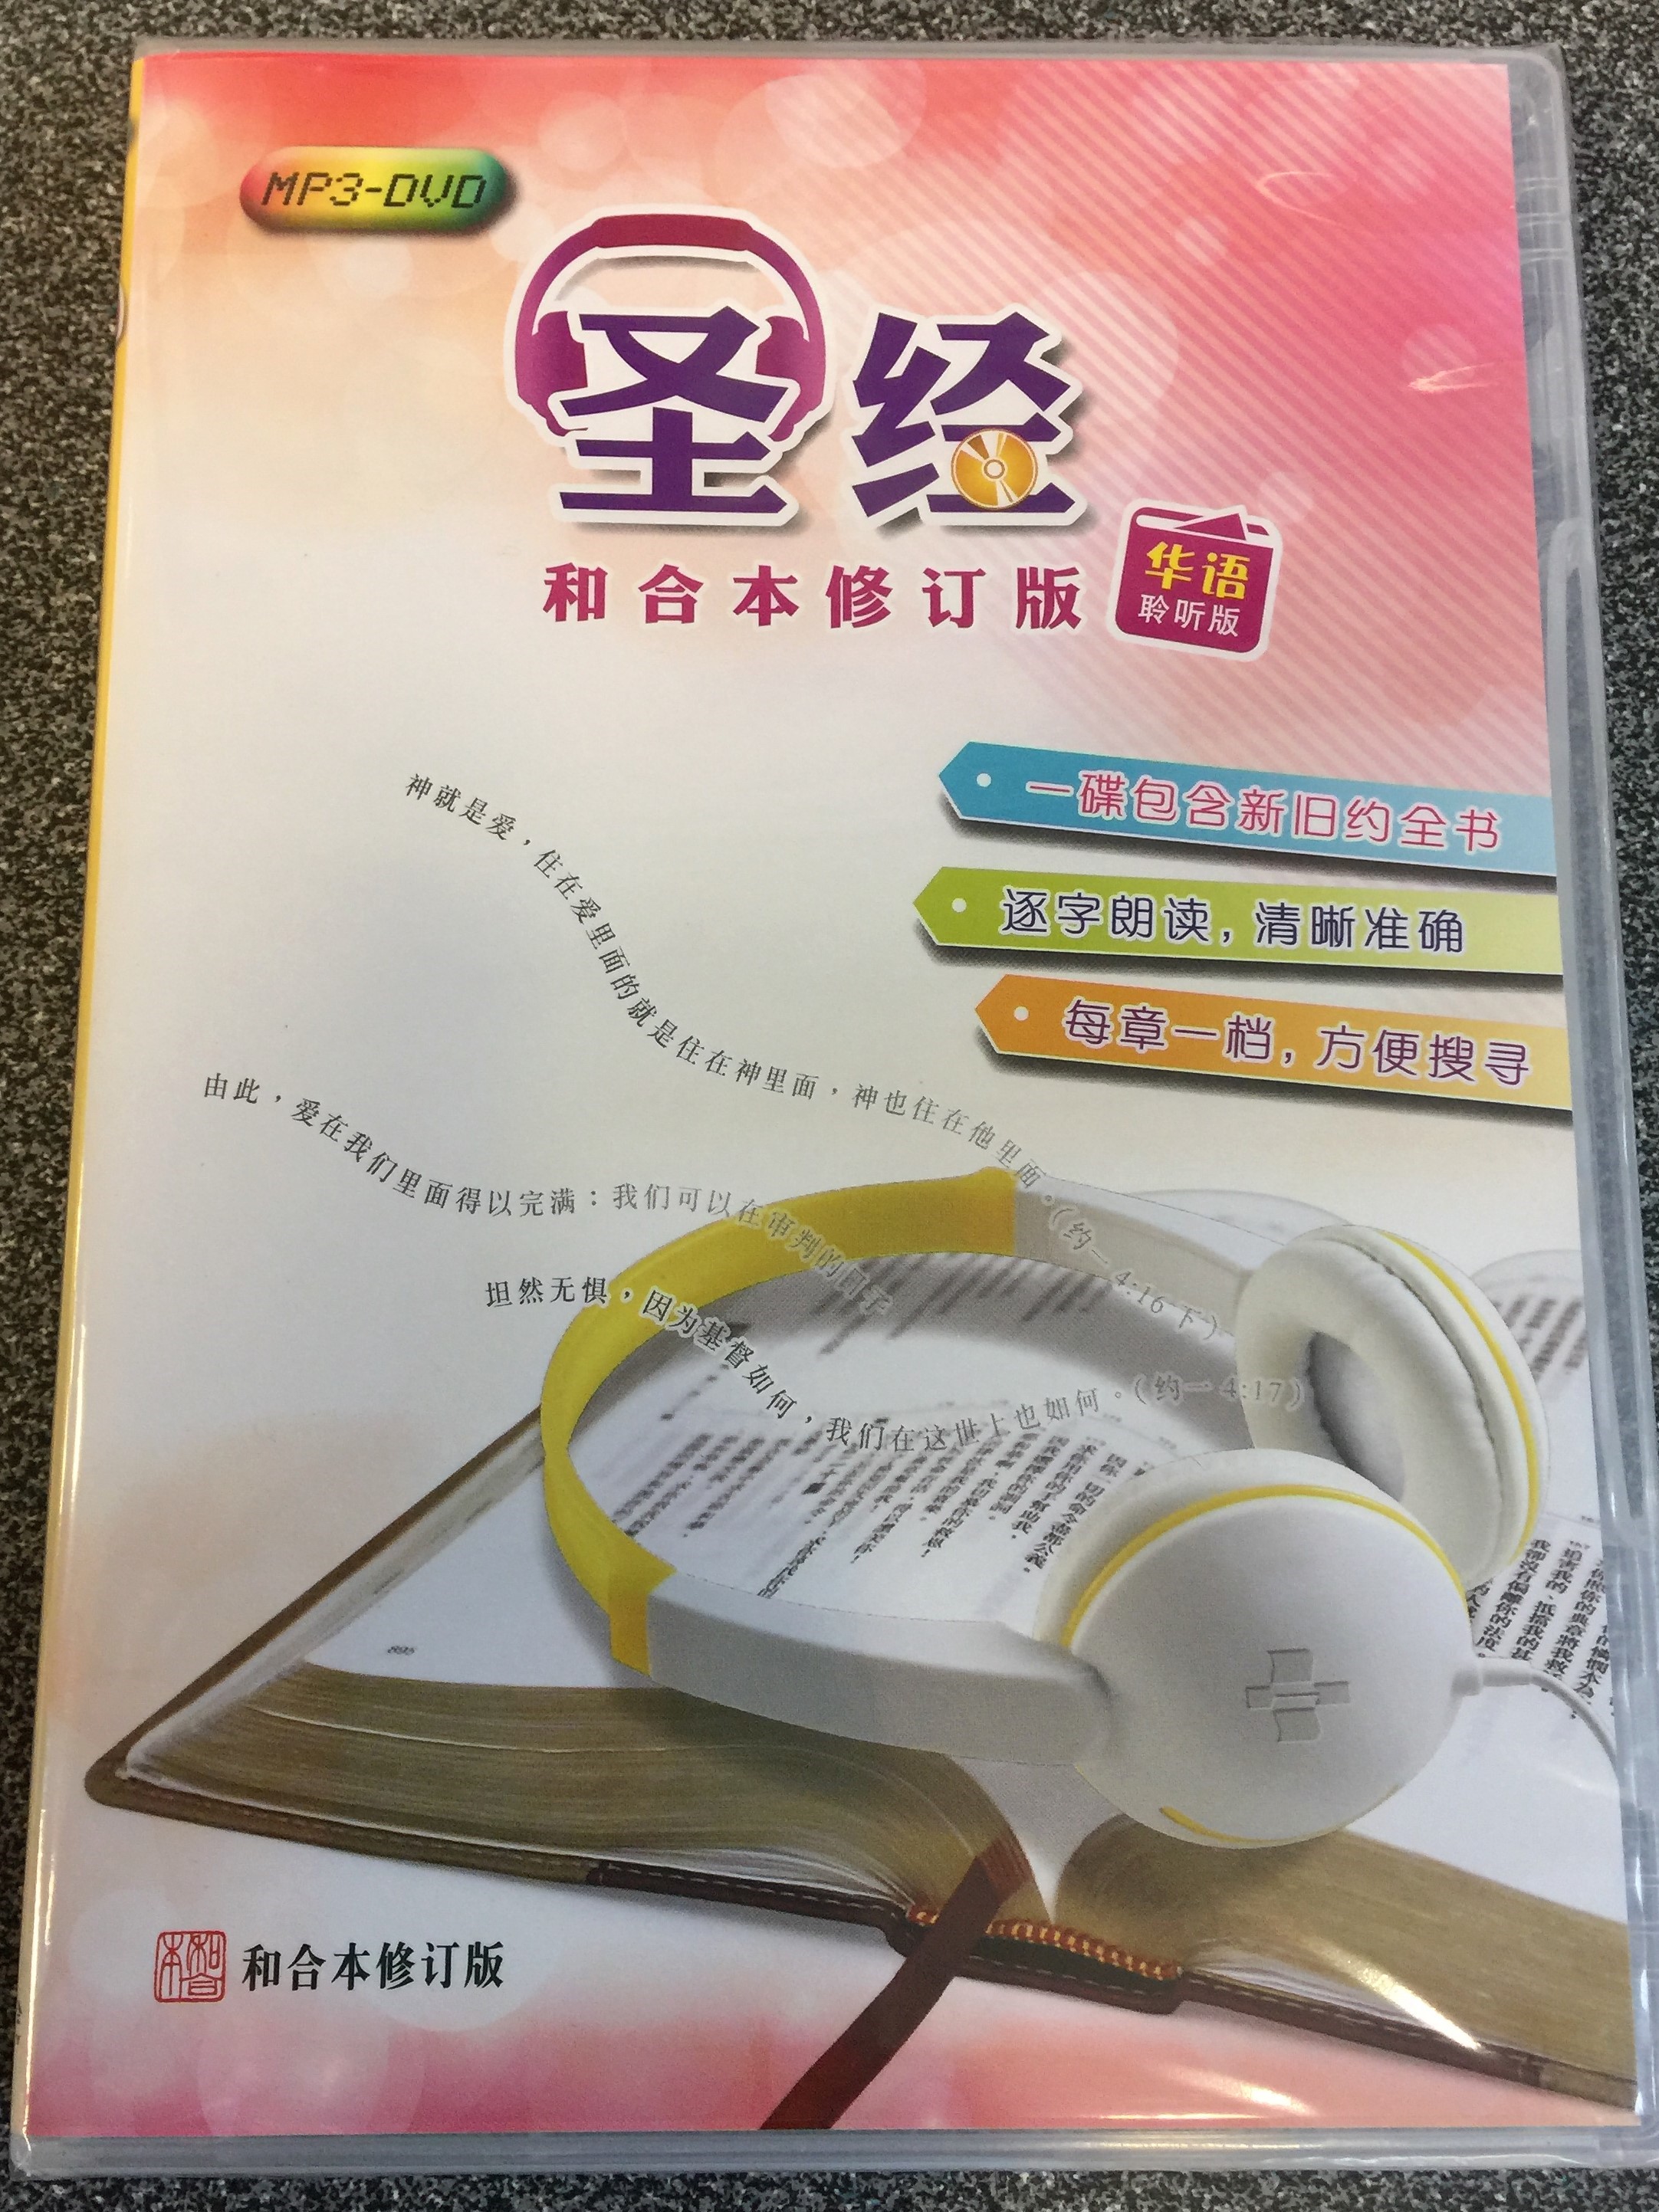 mandarin-audio-bible-revised-chinese-union-version-mp3-dvd-2014-1.jpg